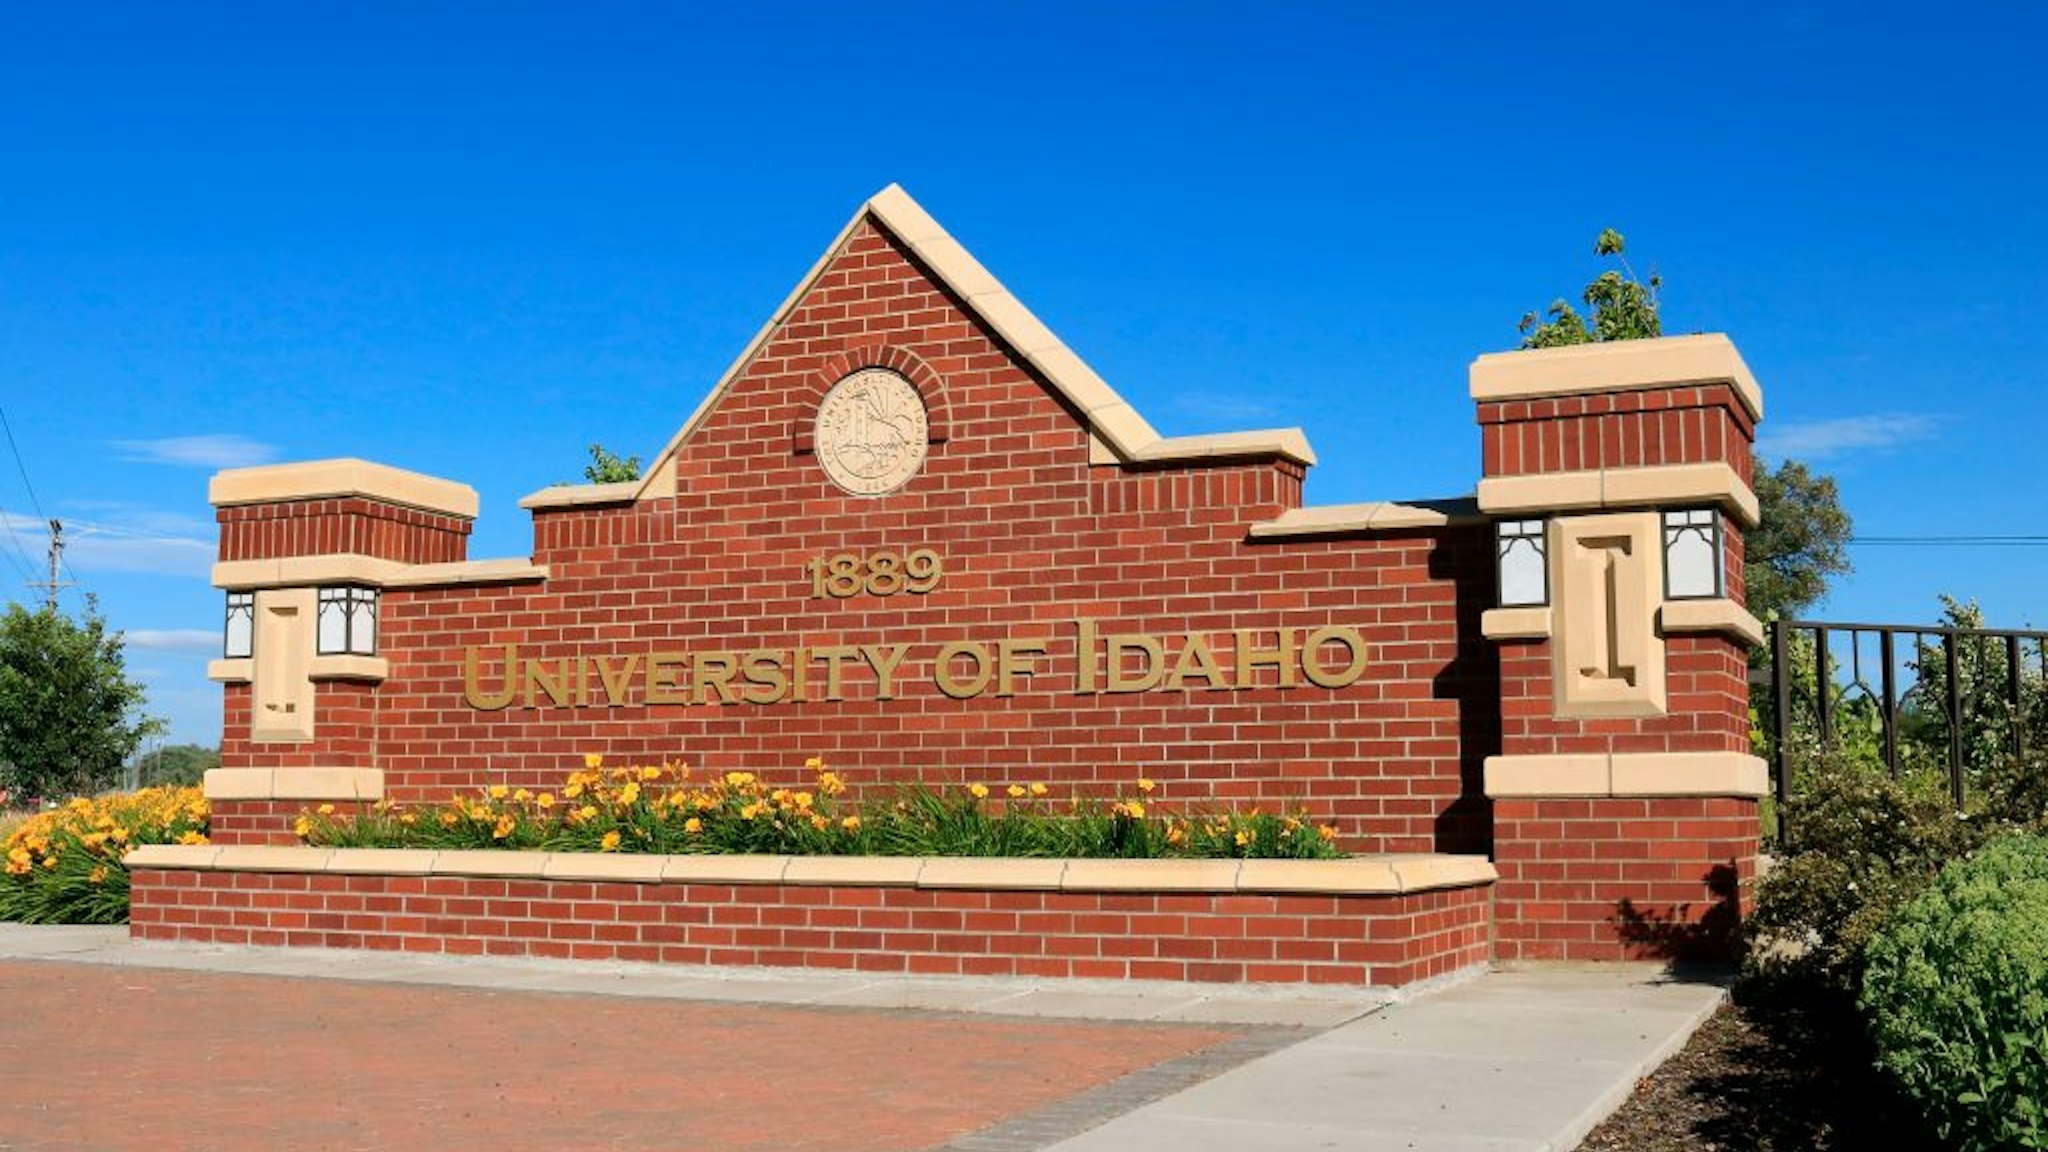 University of Idaho entry sign